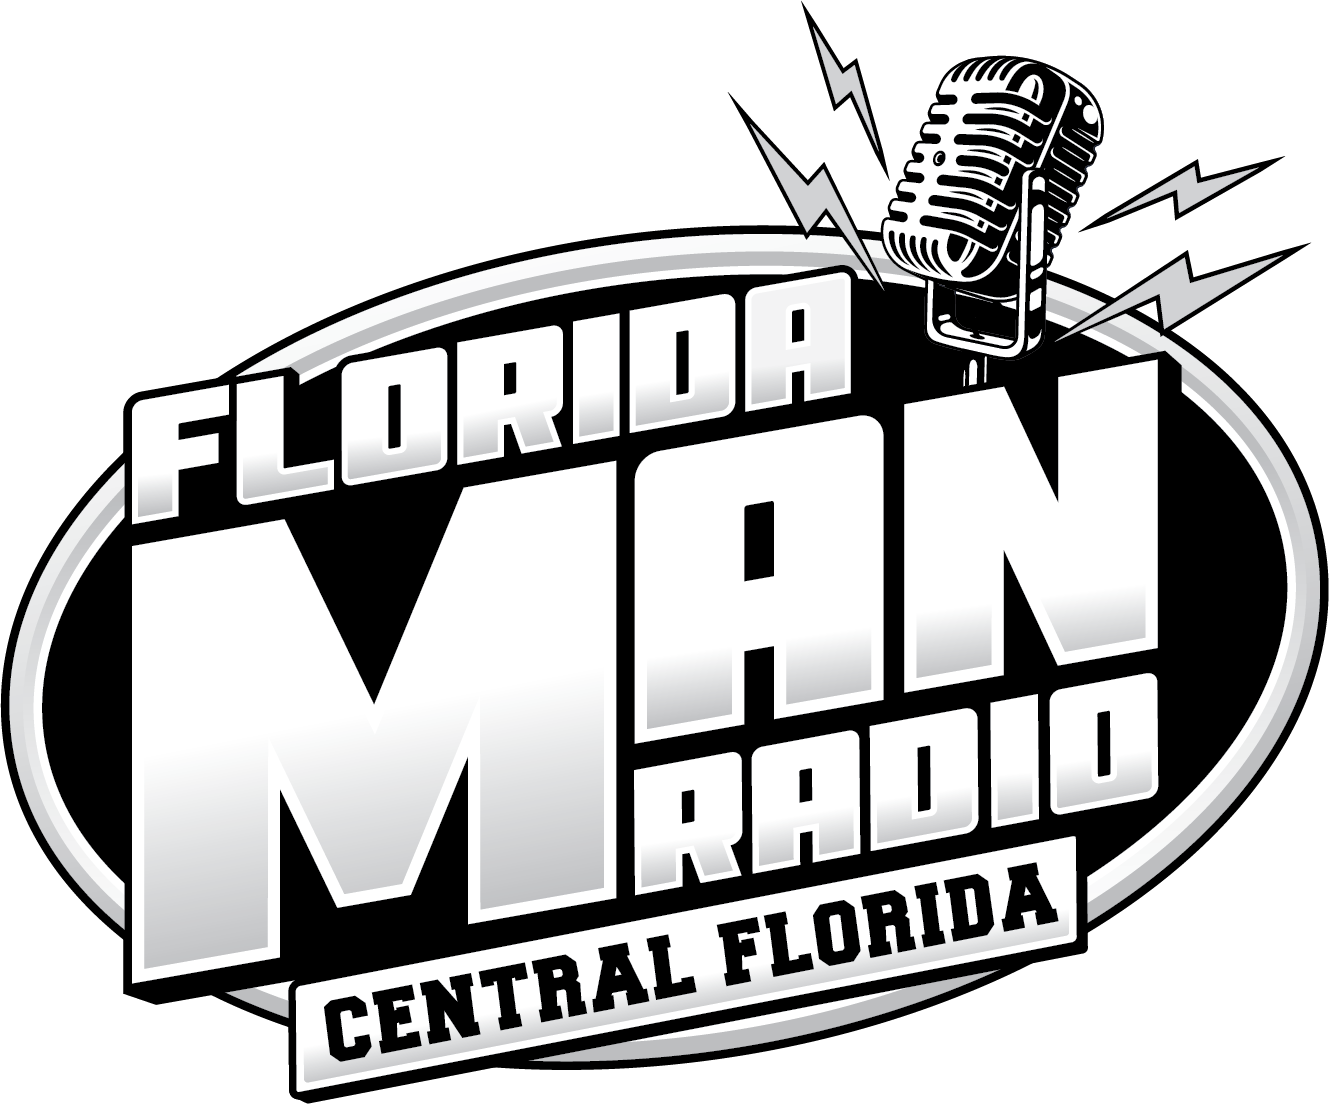 fl-man-logo-central-florida